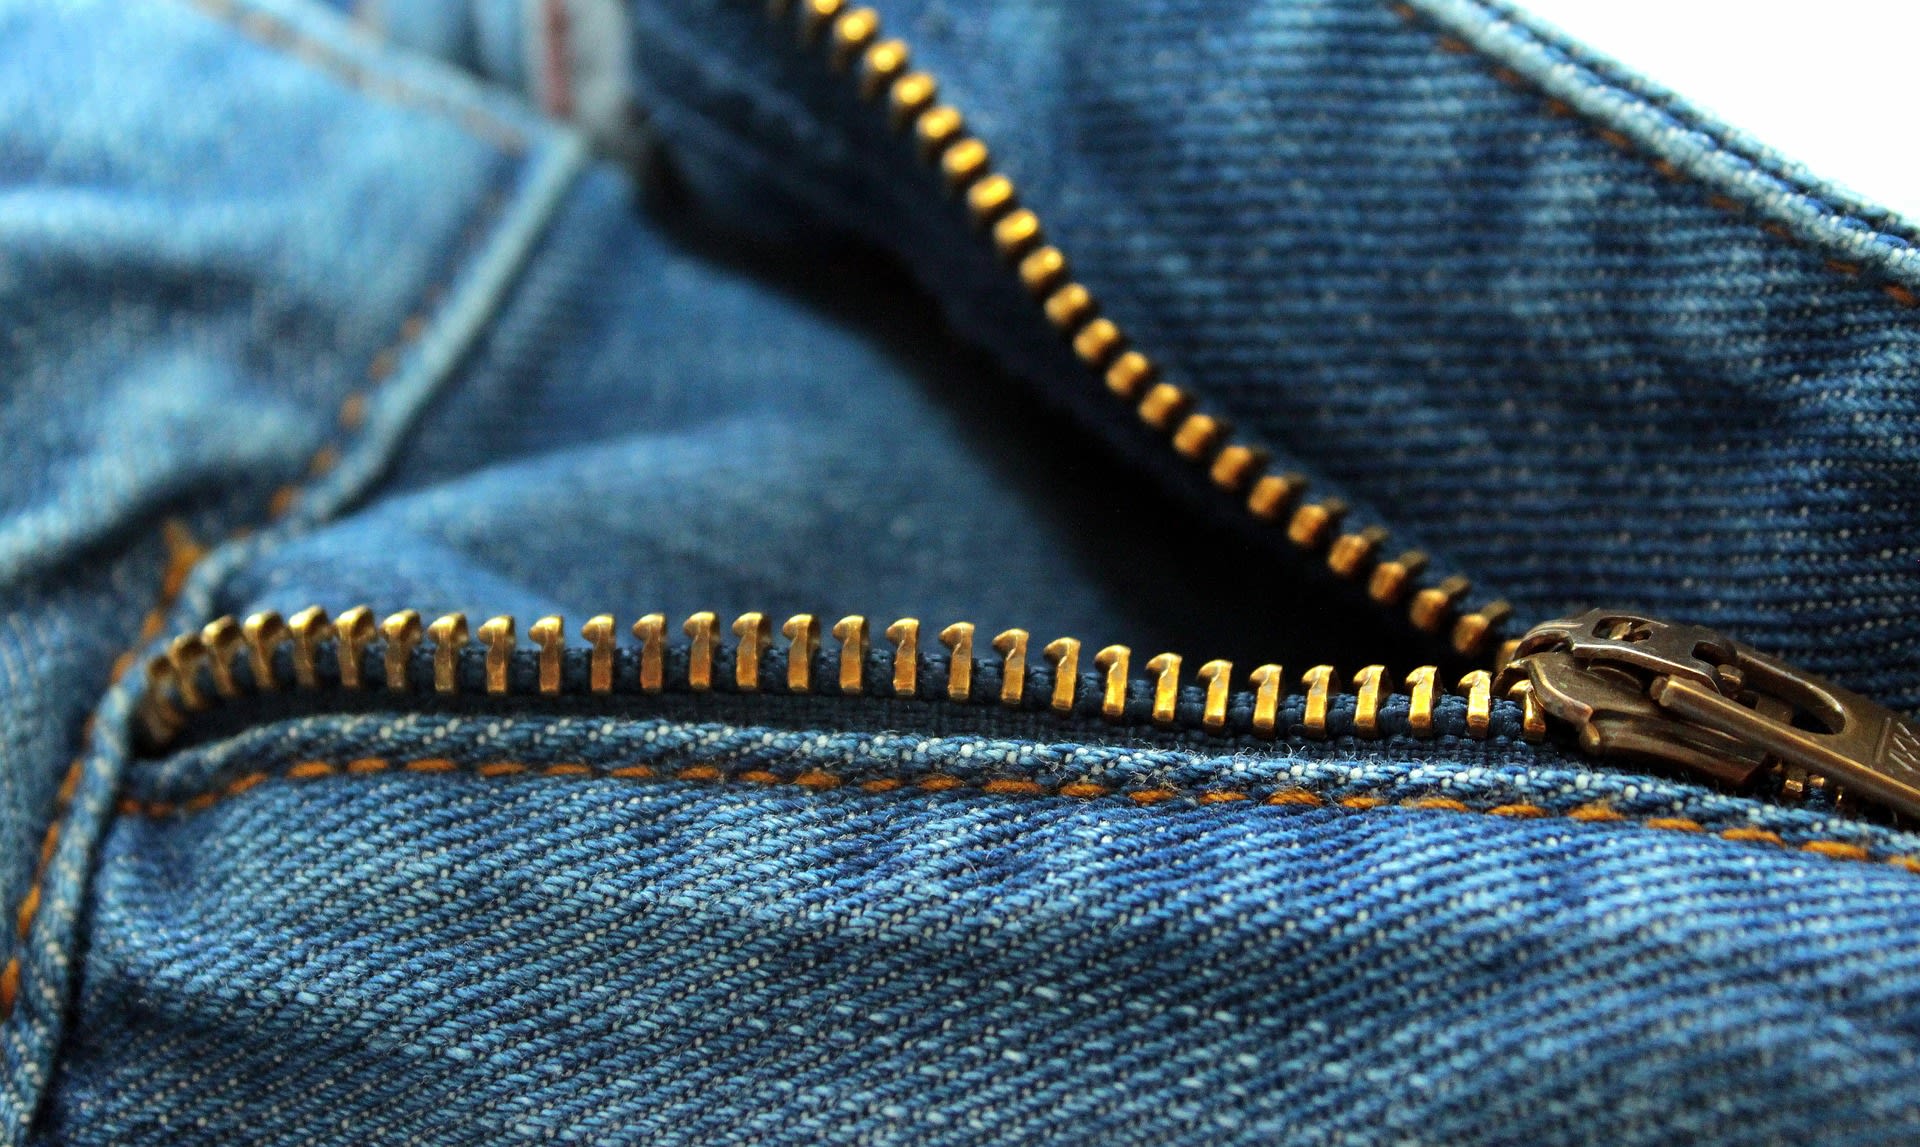 Zipper in blue jeans